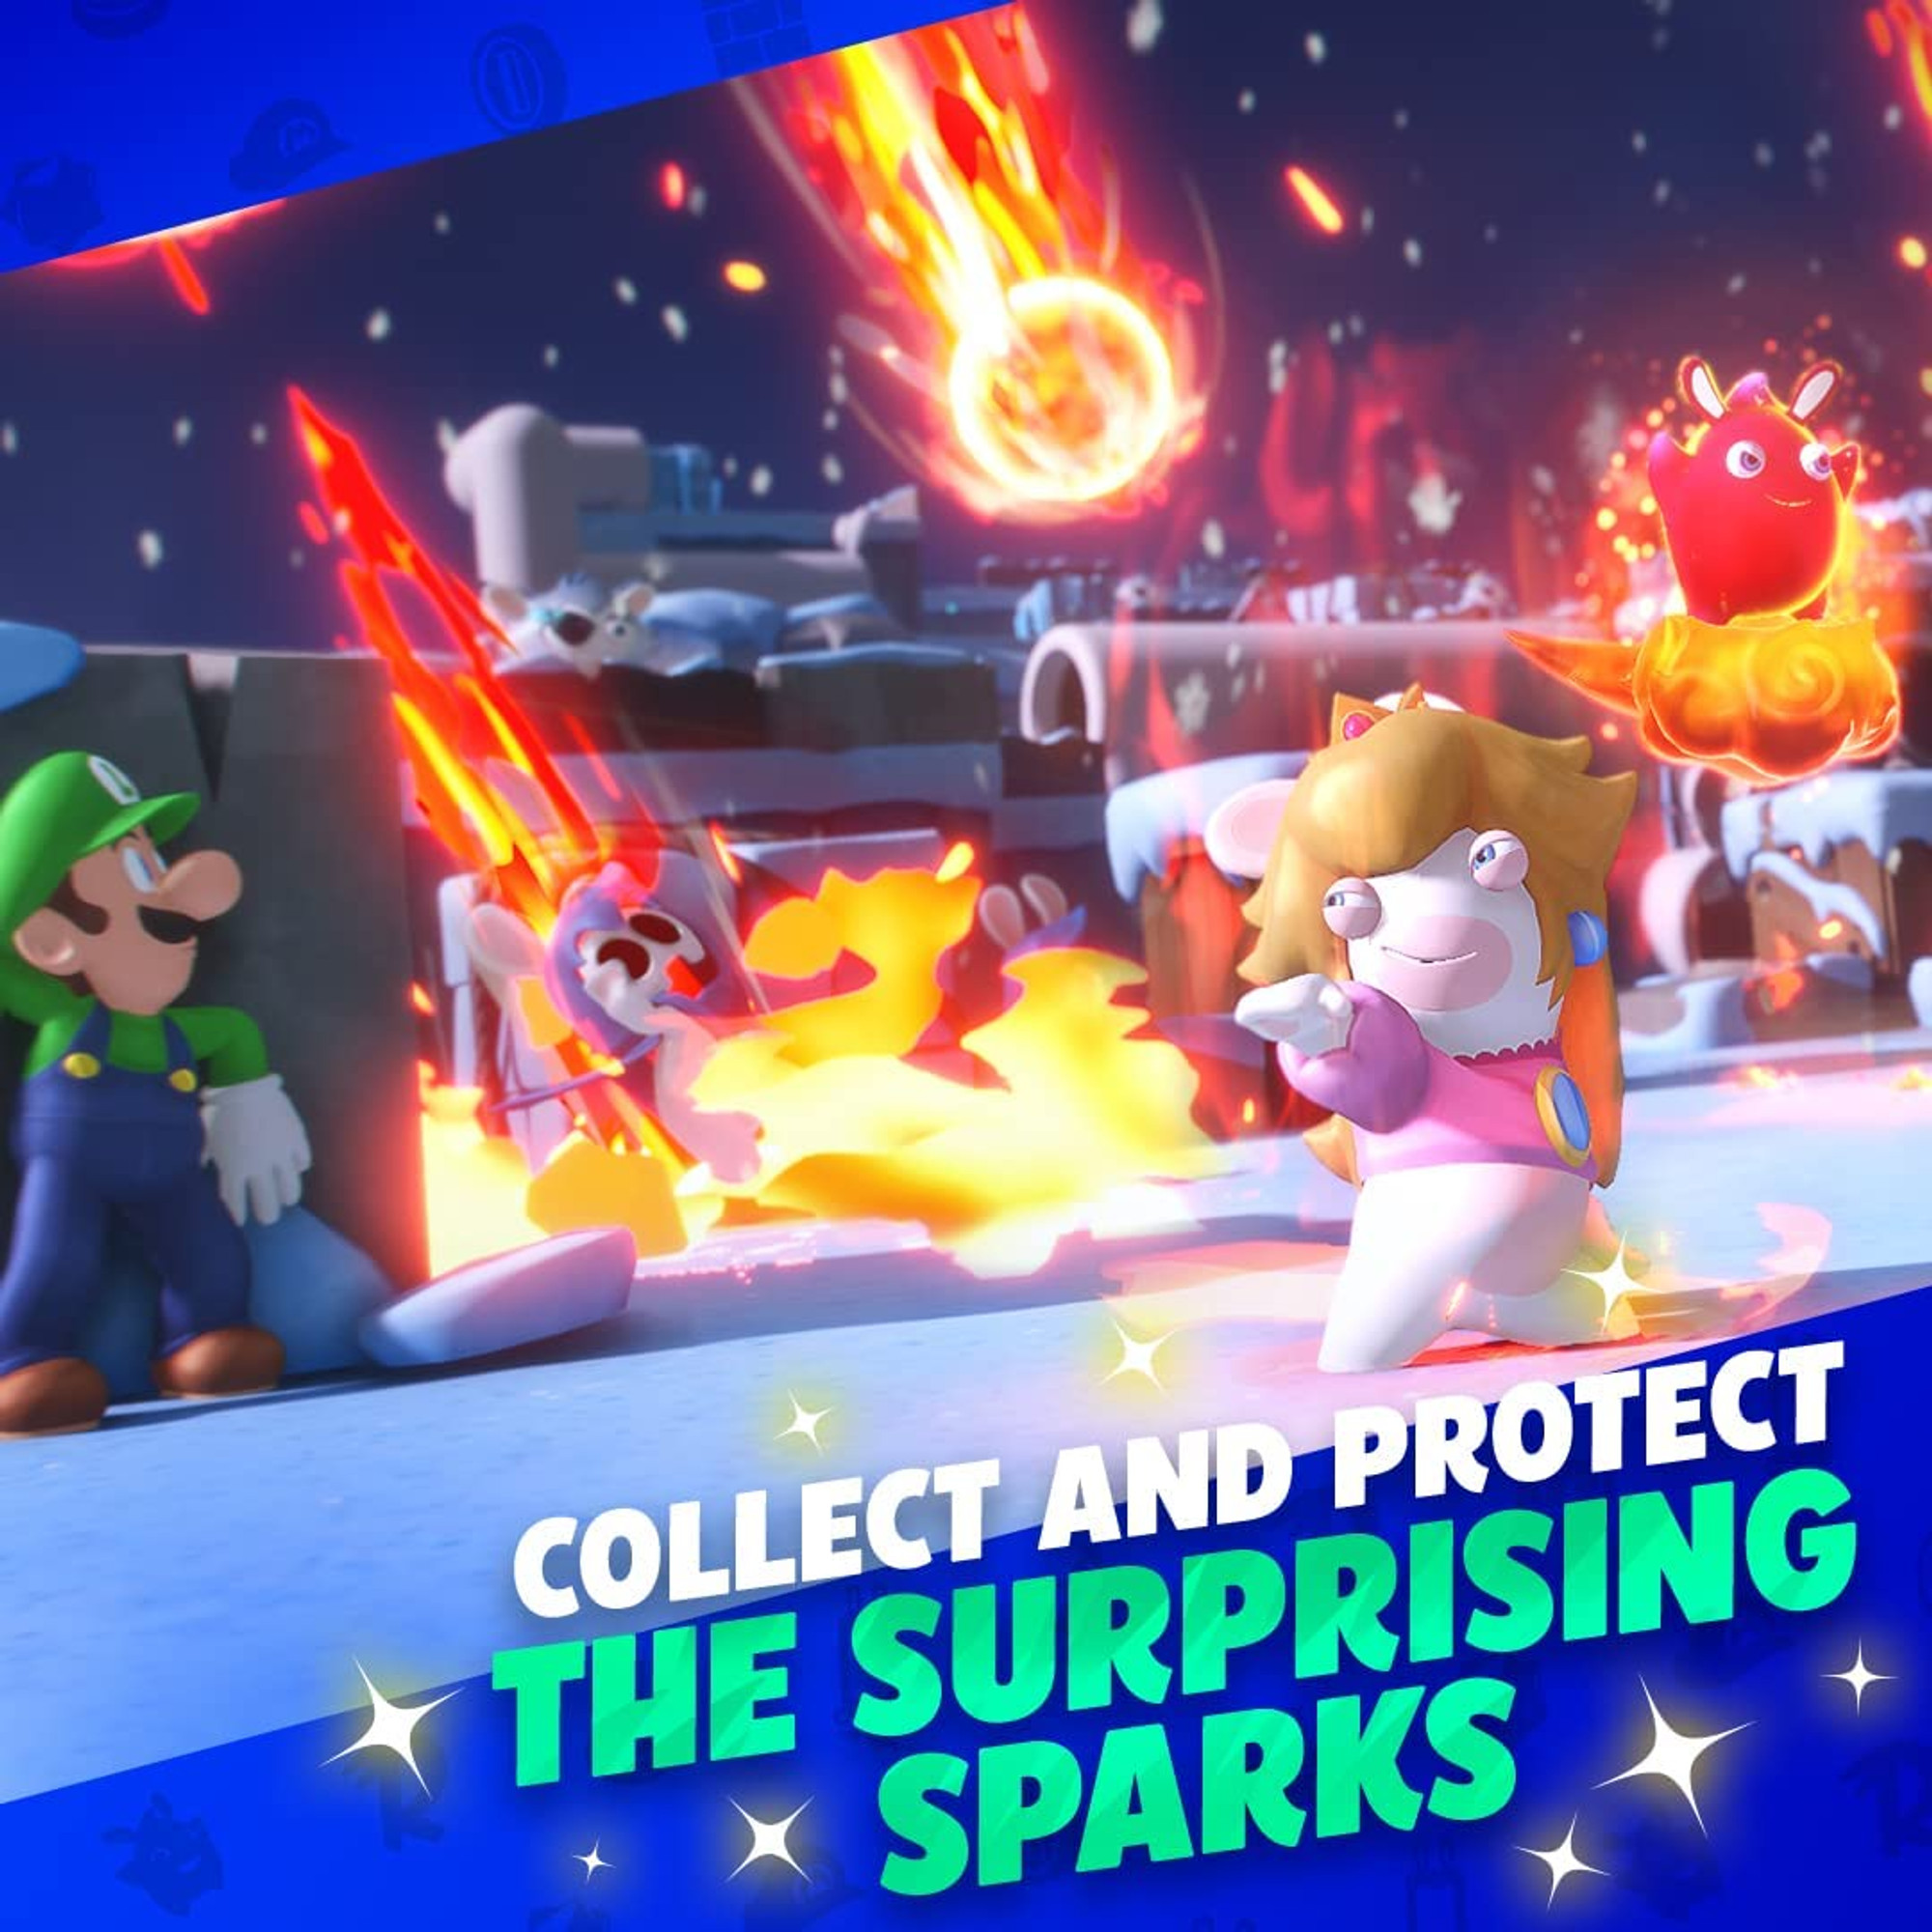 Mario + Rabbids: Sparks of Hope - Nintendo Switch